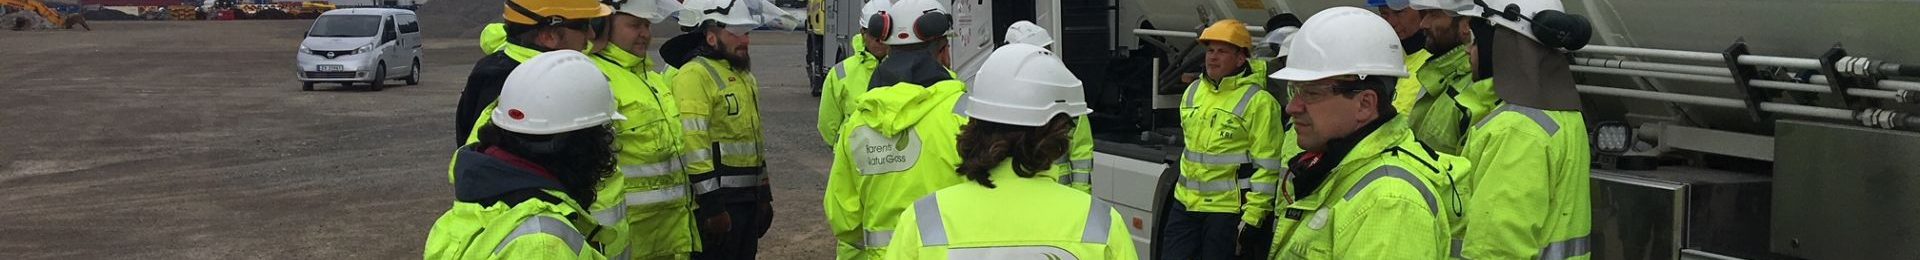 BNG molgas safety training LNG Hammerfest